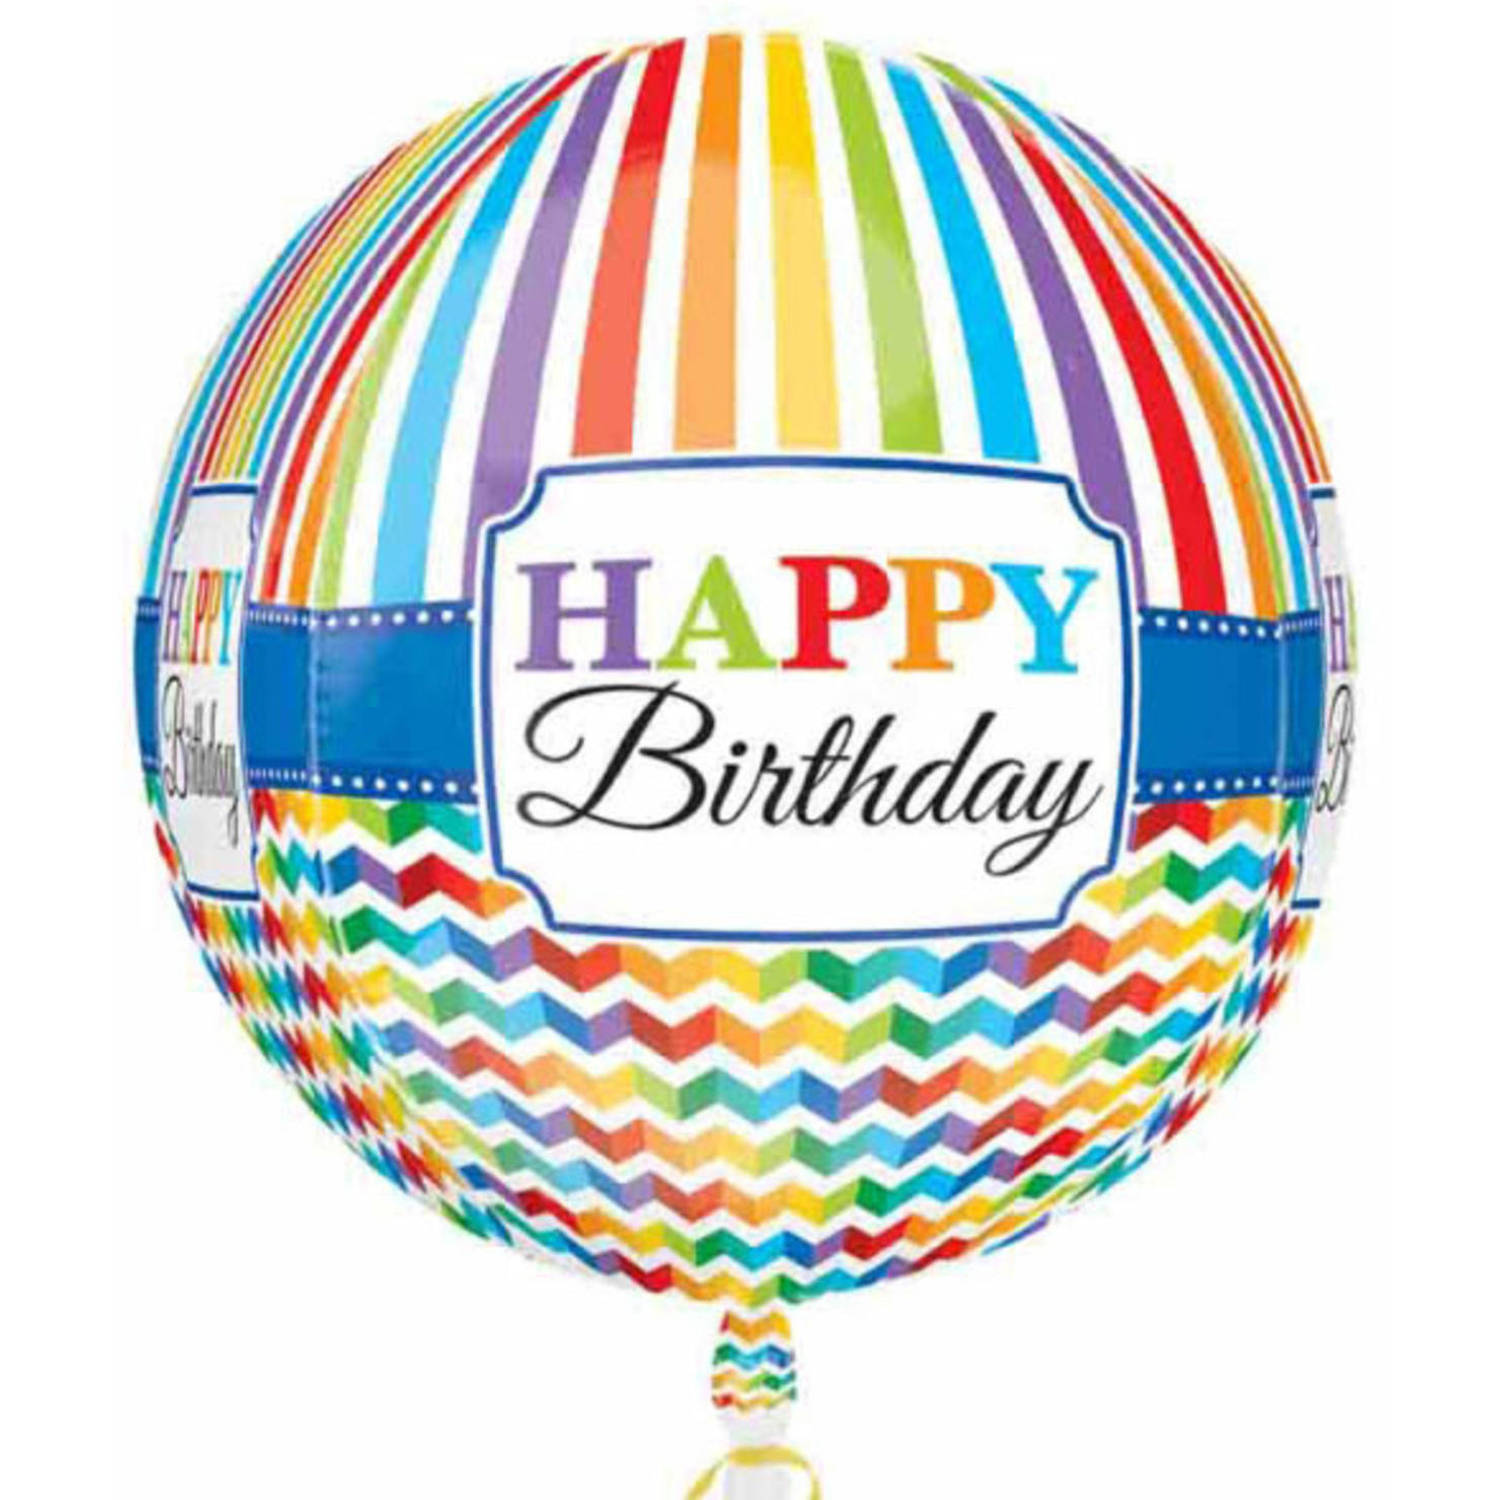 Folie ballon orbz/rond Gefeliciteerd/Happy Birthday 40 cm met helium gevuld - Ballonnen